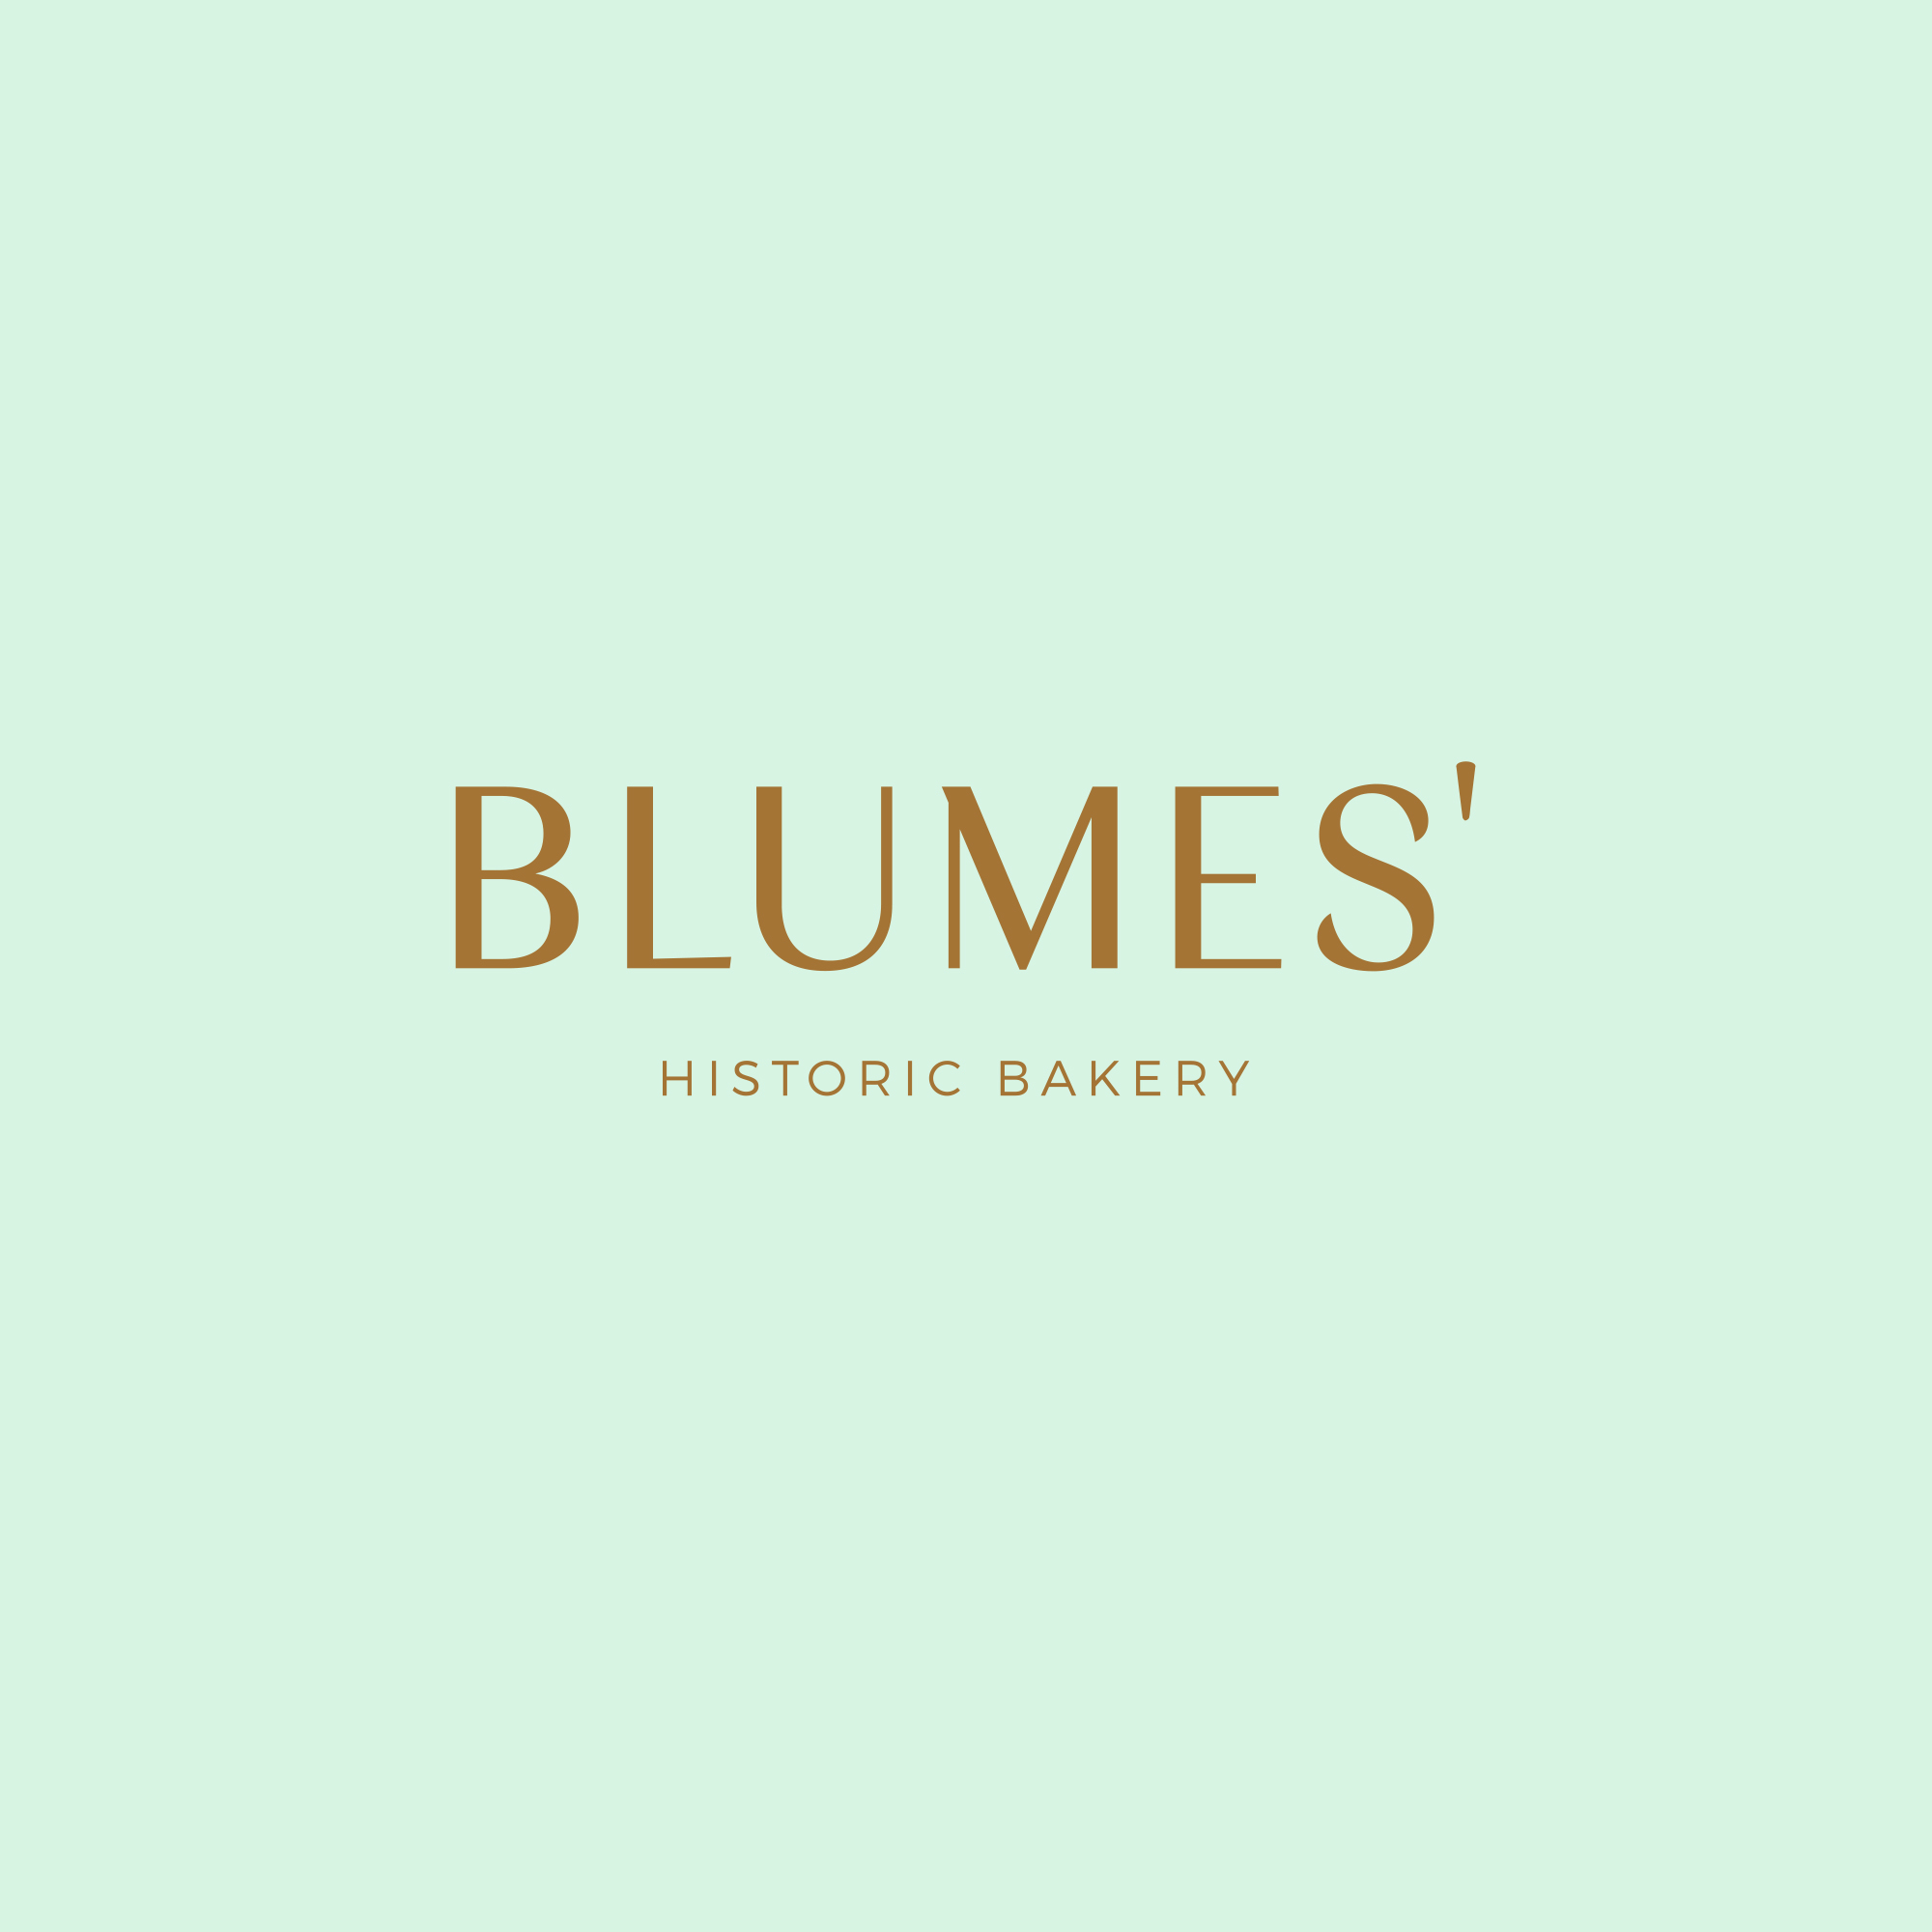 Blumes' Bakery logo on coloured background